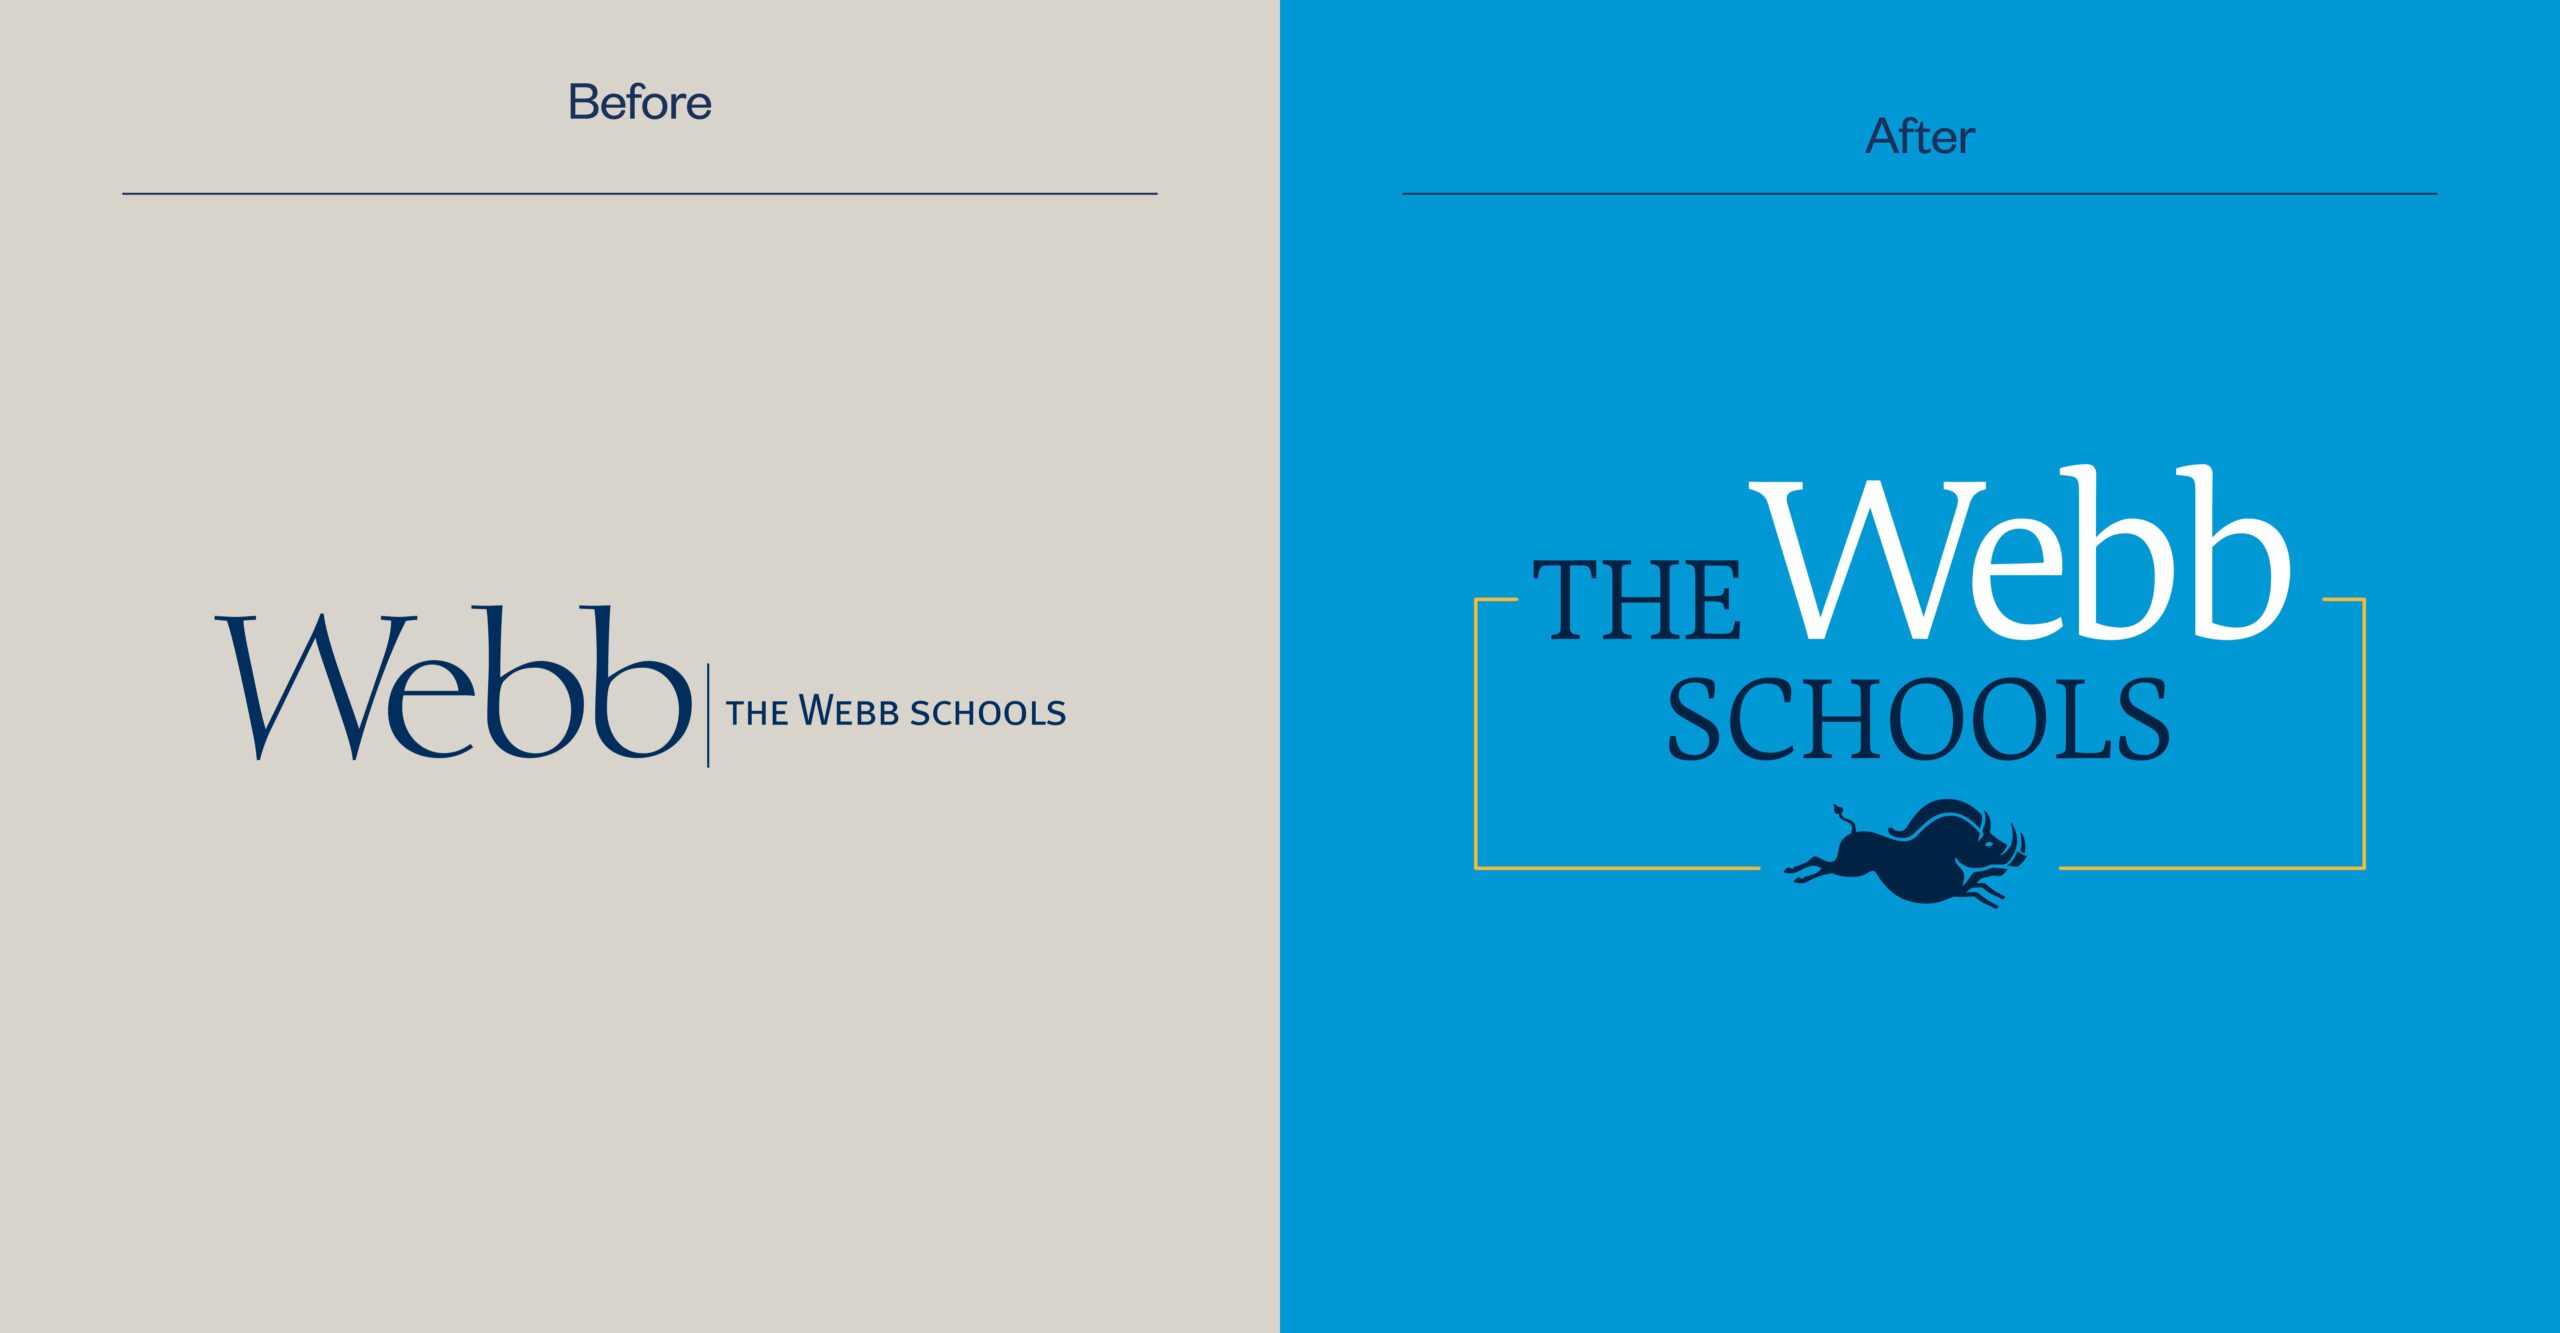 The Webb Schools brand identity designed by Kilter.